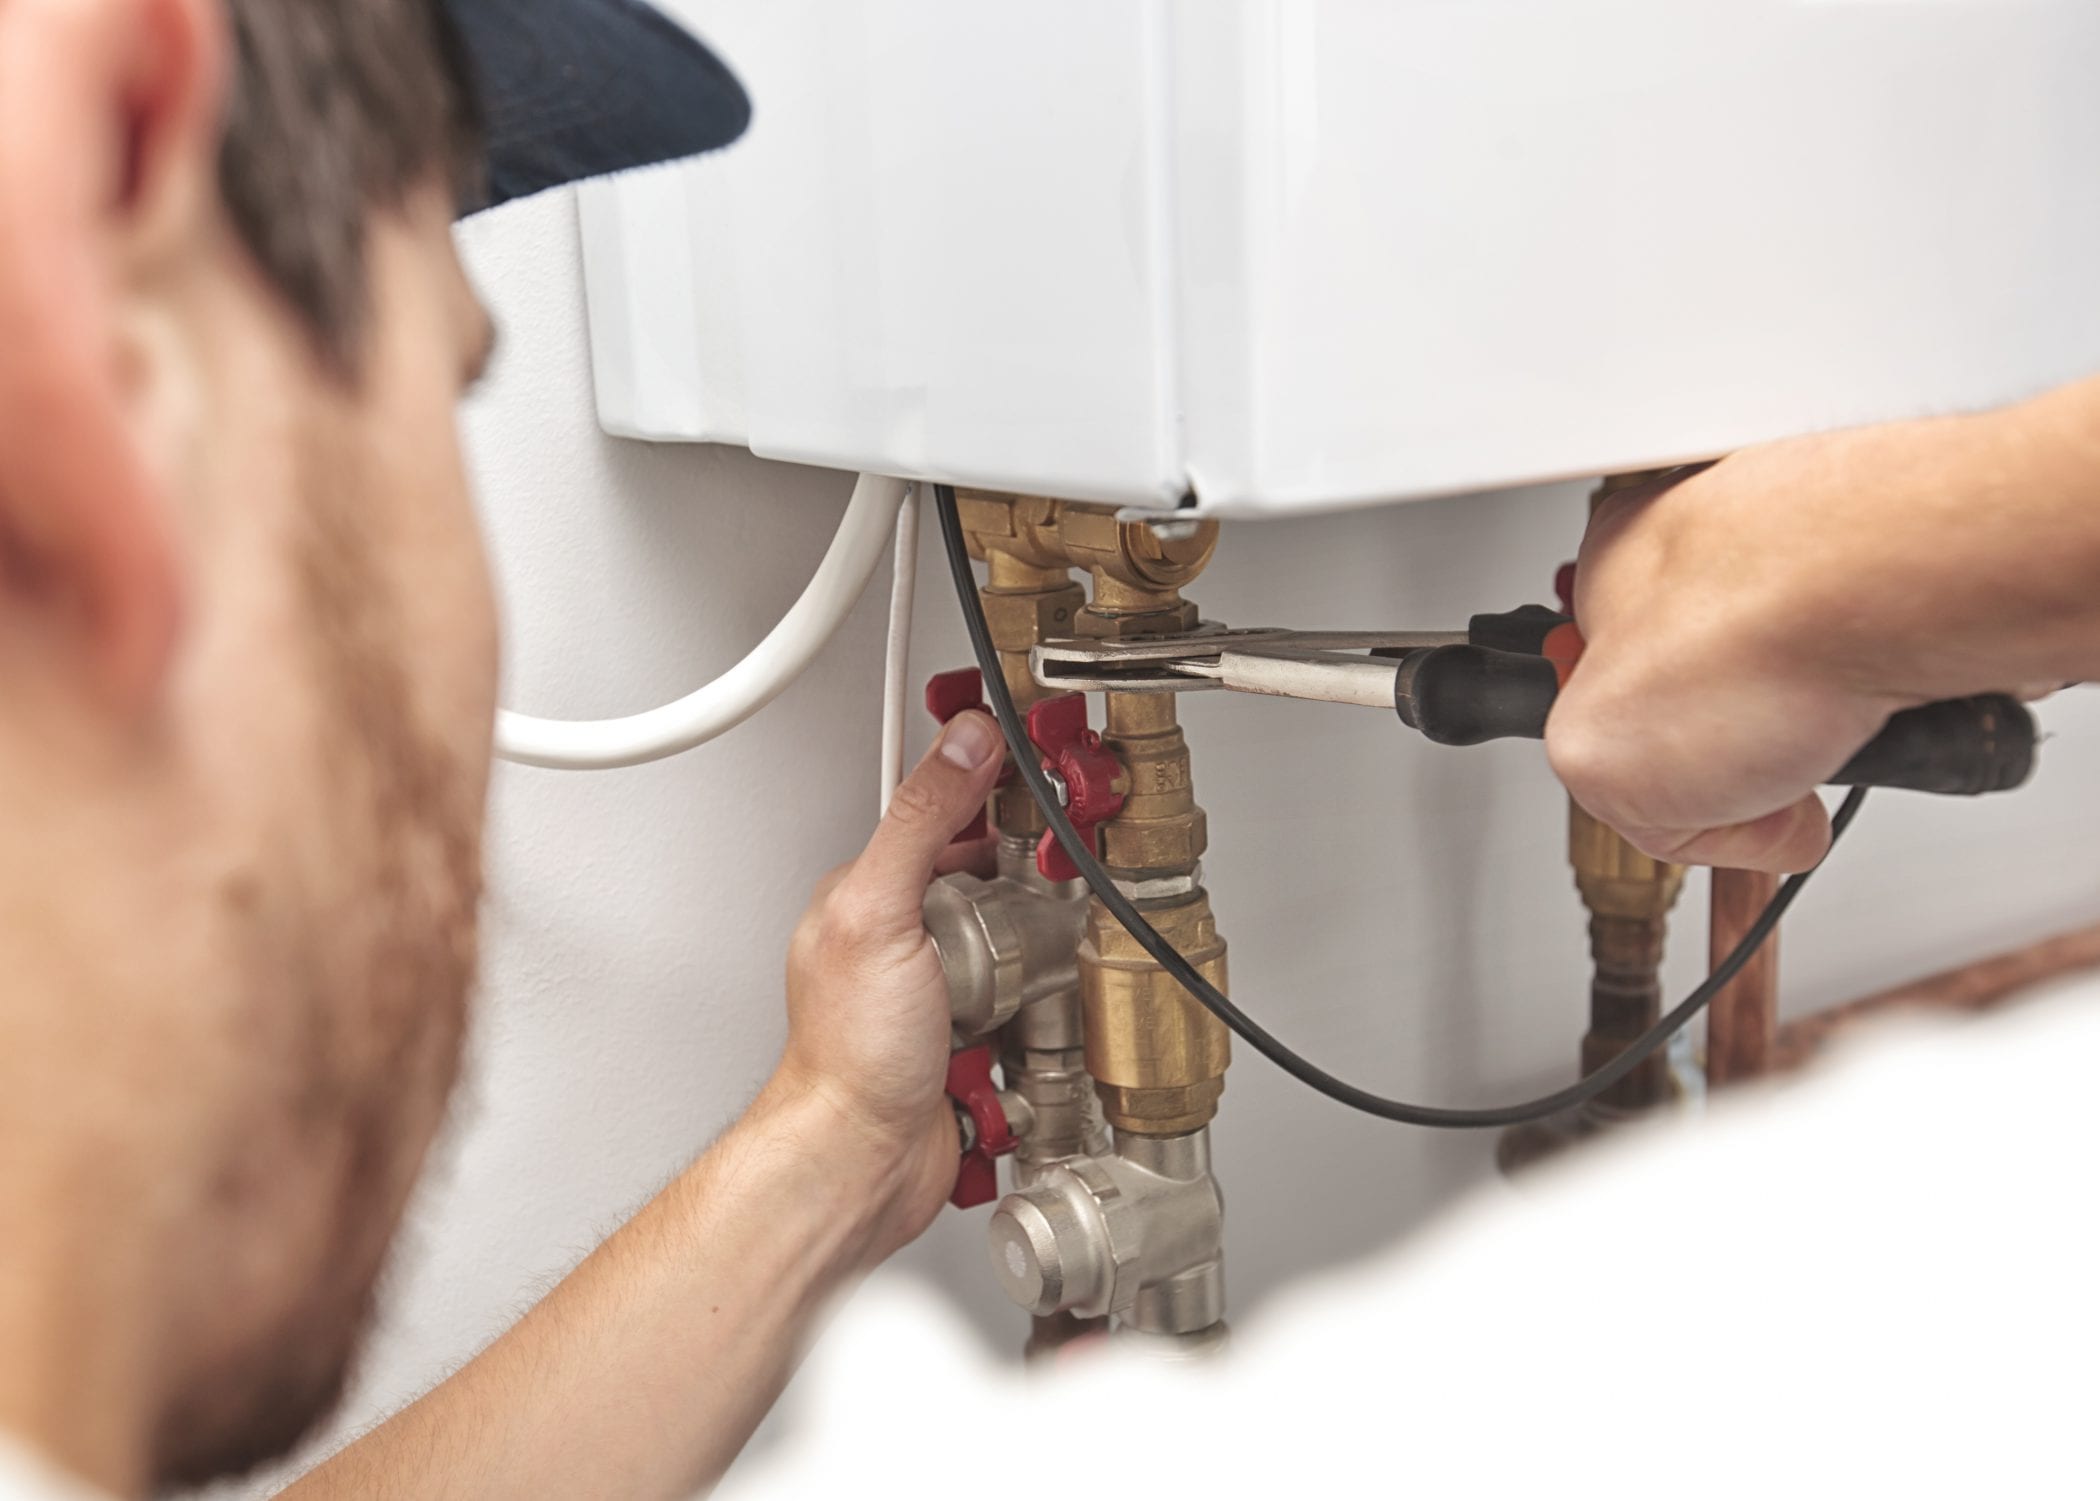 How To Repair Hot Water Heater